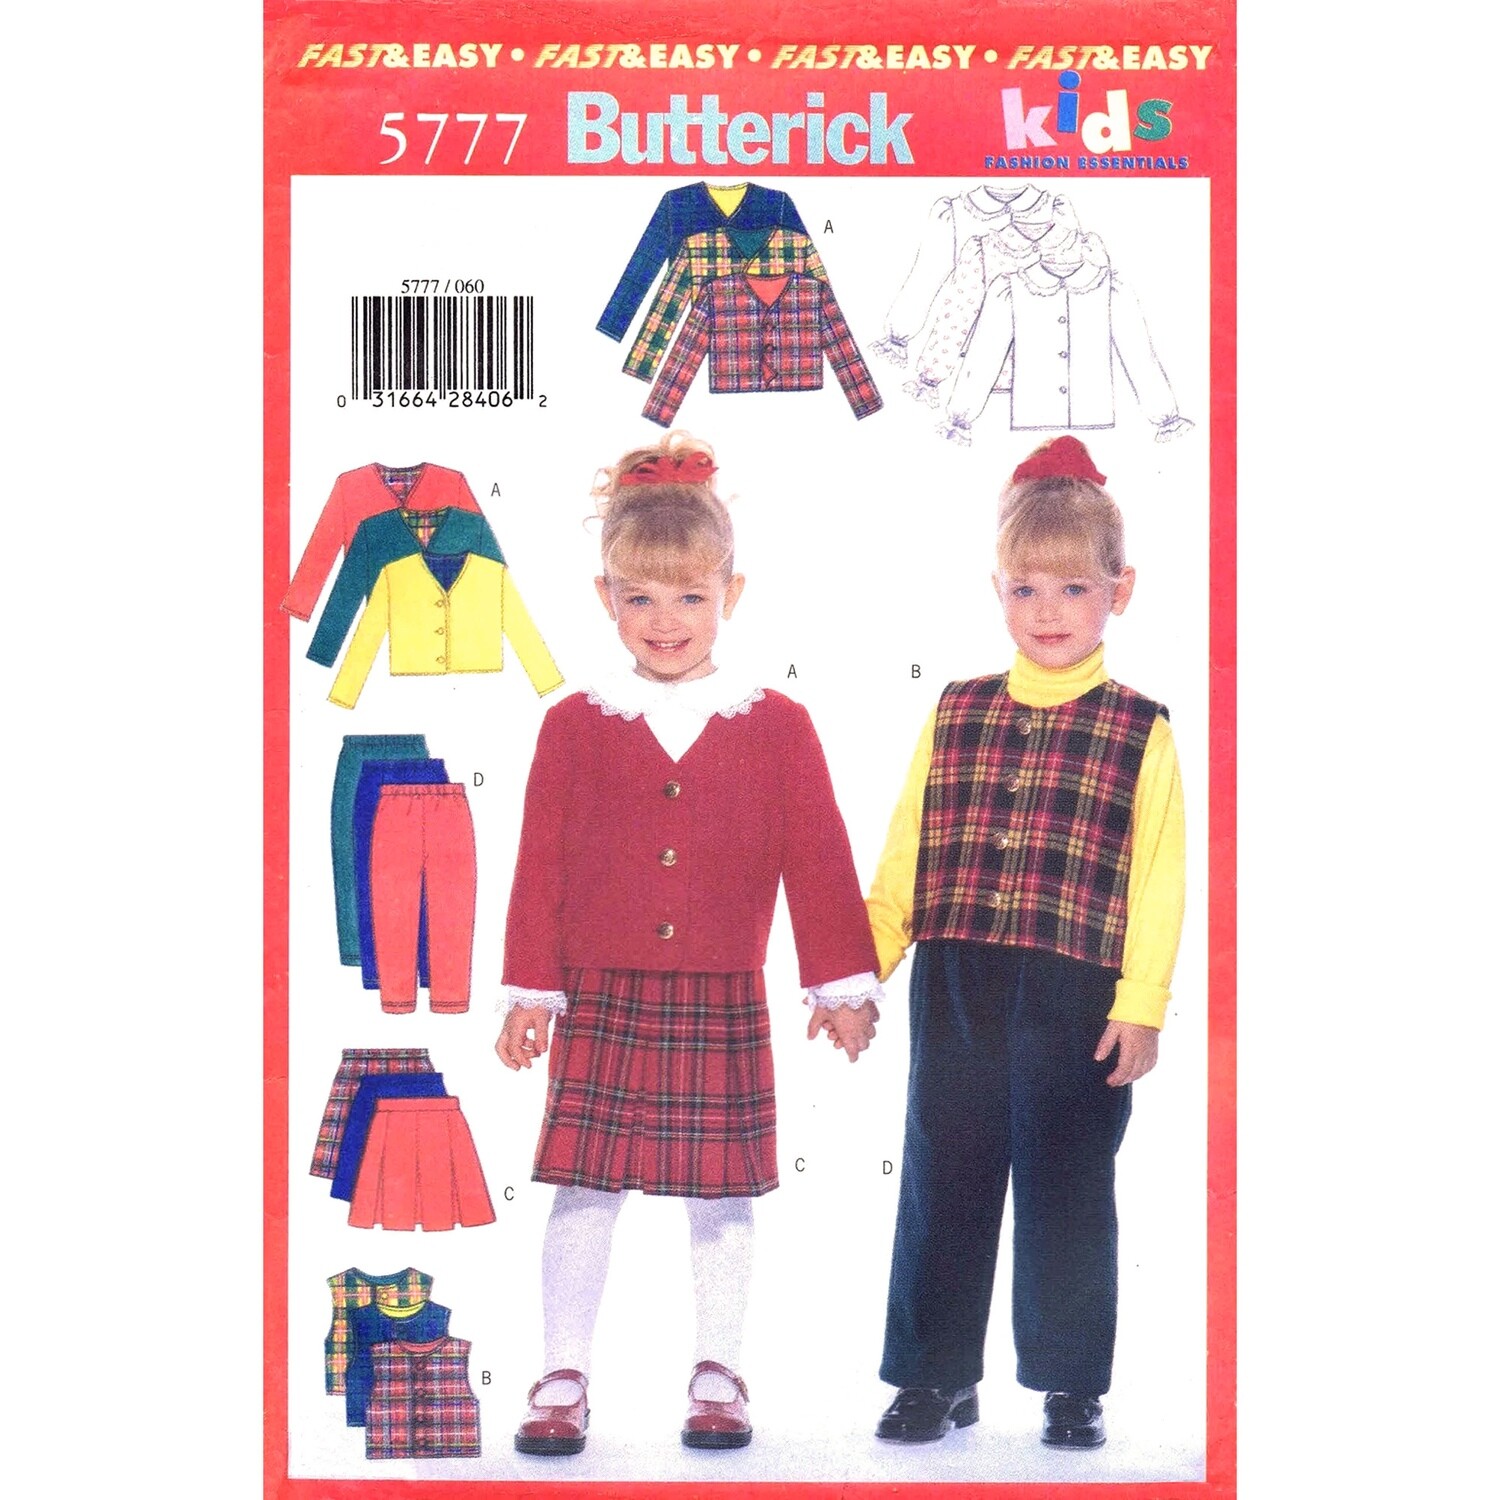 Butterick 5777 pattern